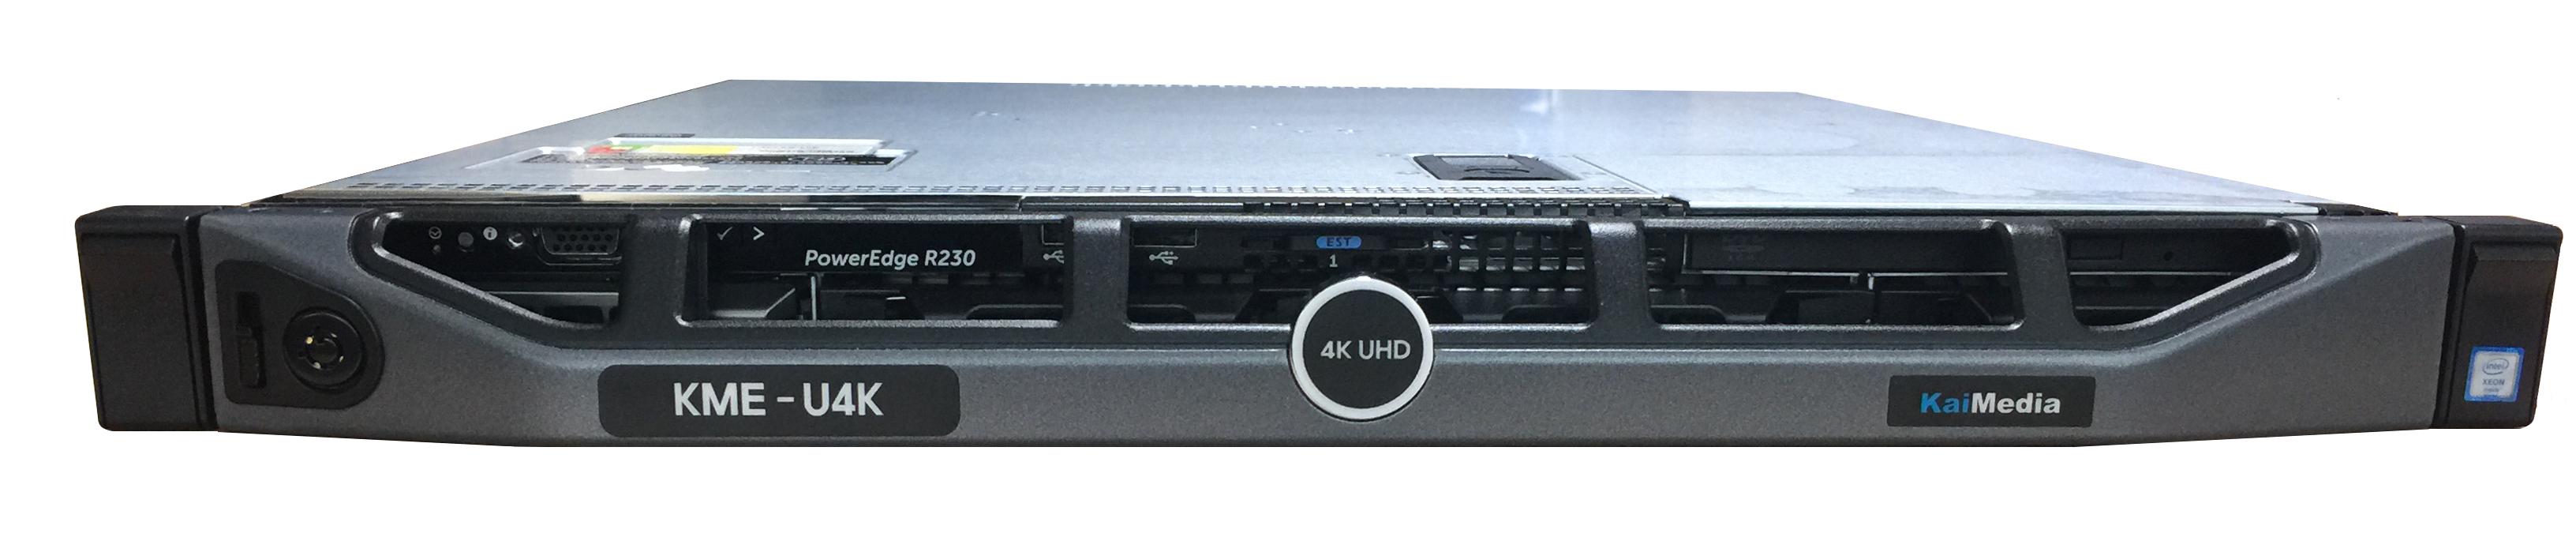 The KME-U4K broadcast encoder supports MPEG-H Audio.